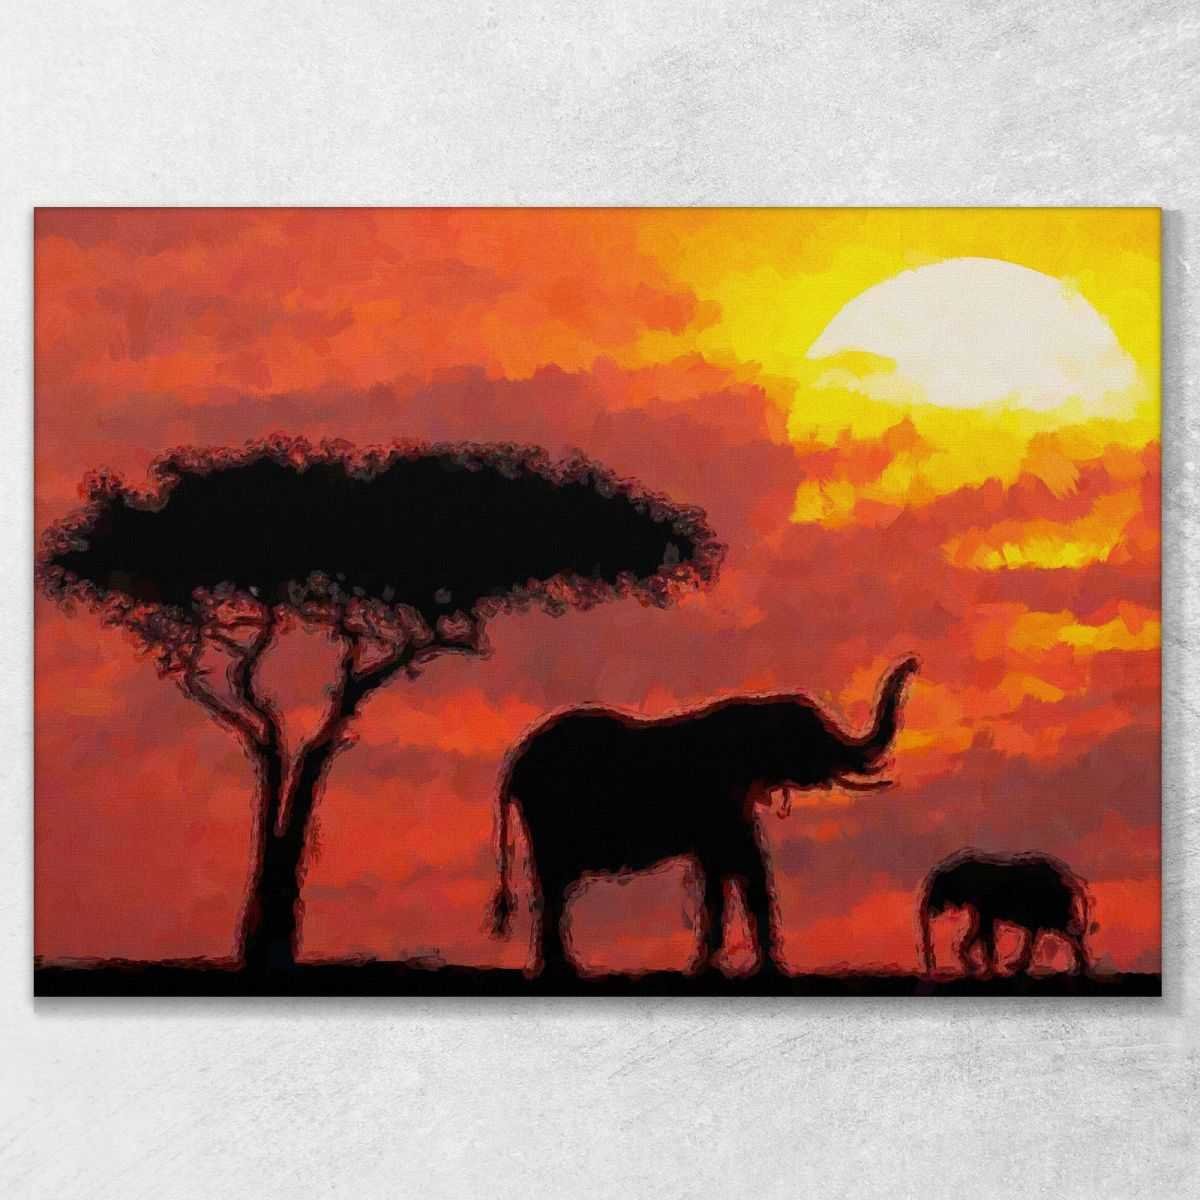 ❤️ Quadro etnico elefanti al tramonto quadro africano stampa su tela afr3